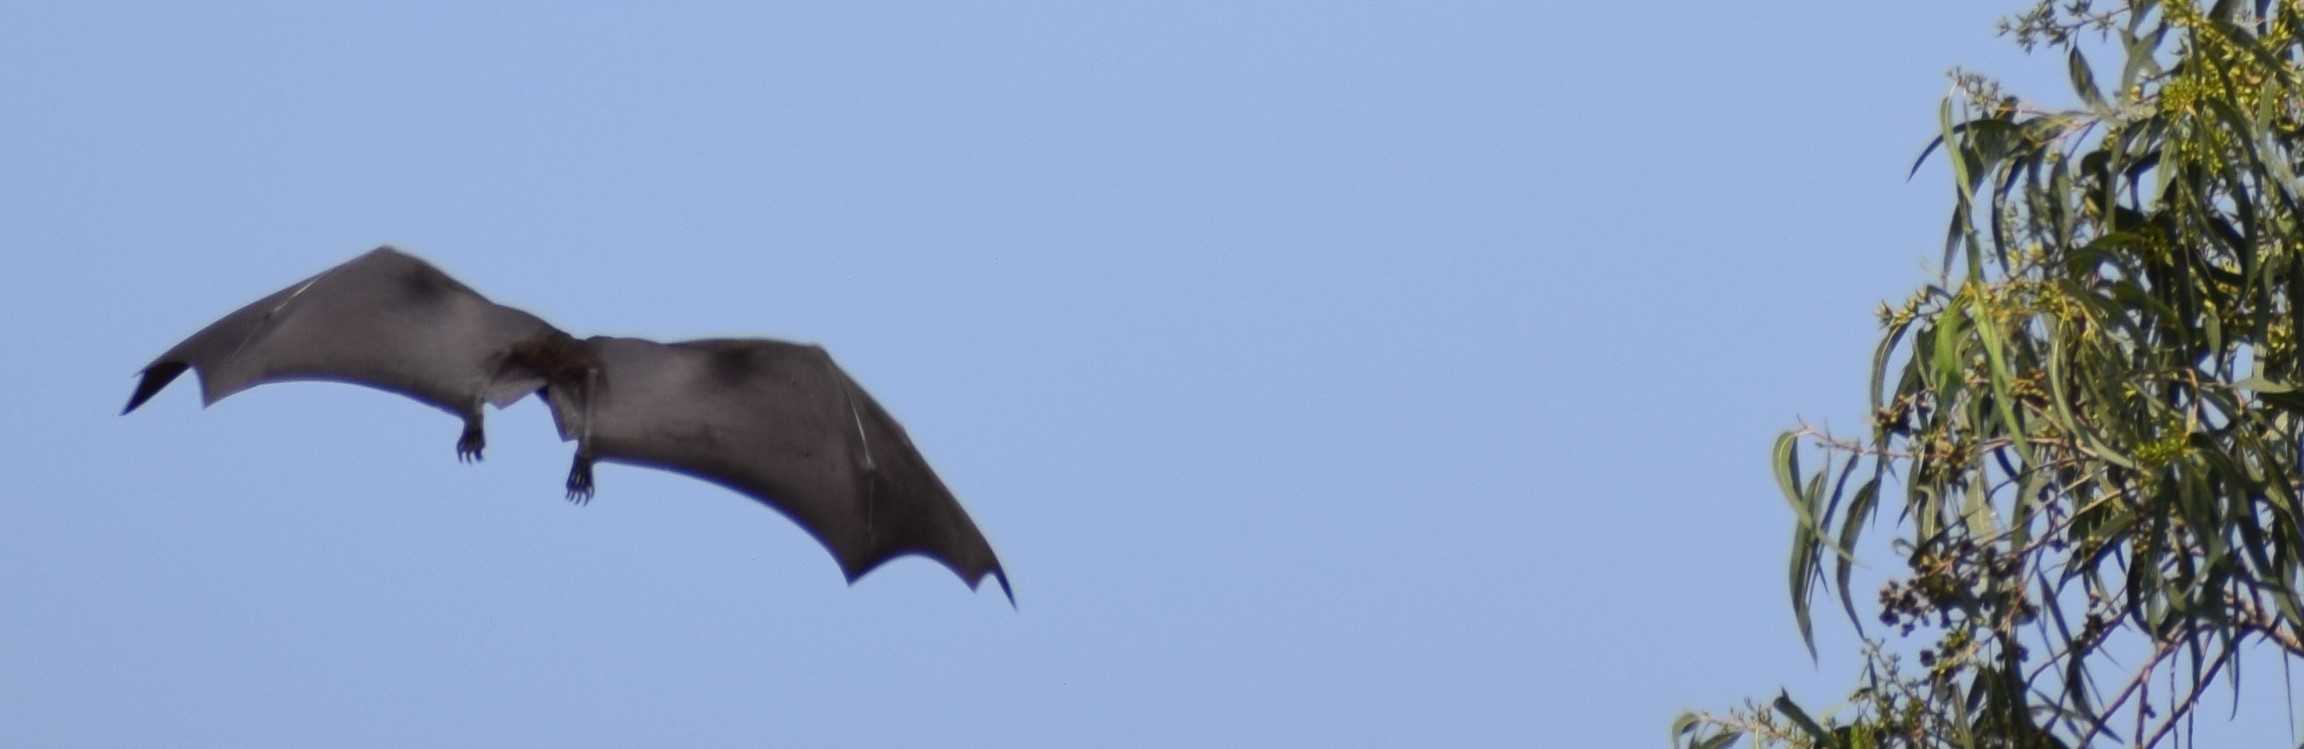 Indian Flying Fox in flight, fruit bats, Wadaj Dam, Junnar, Pune, Maharashtra, India